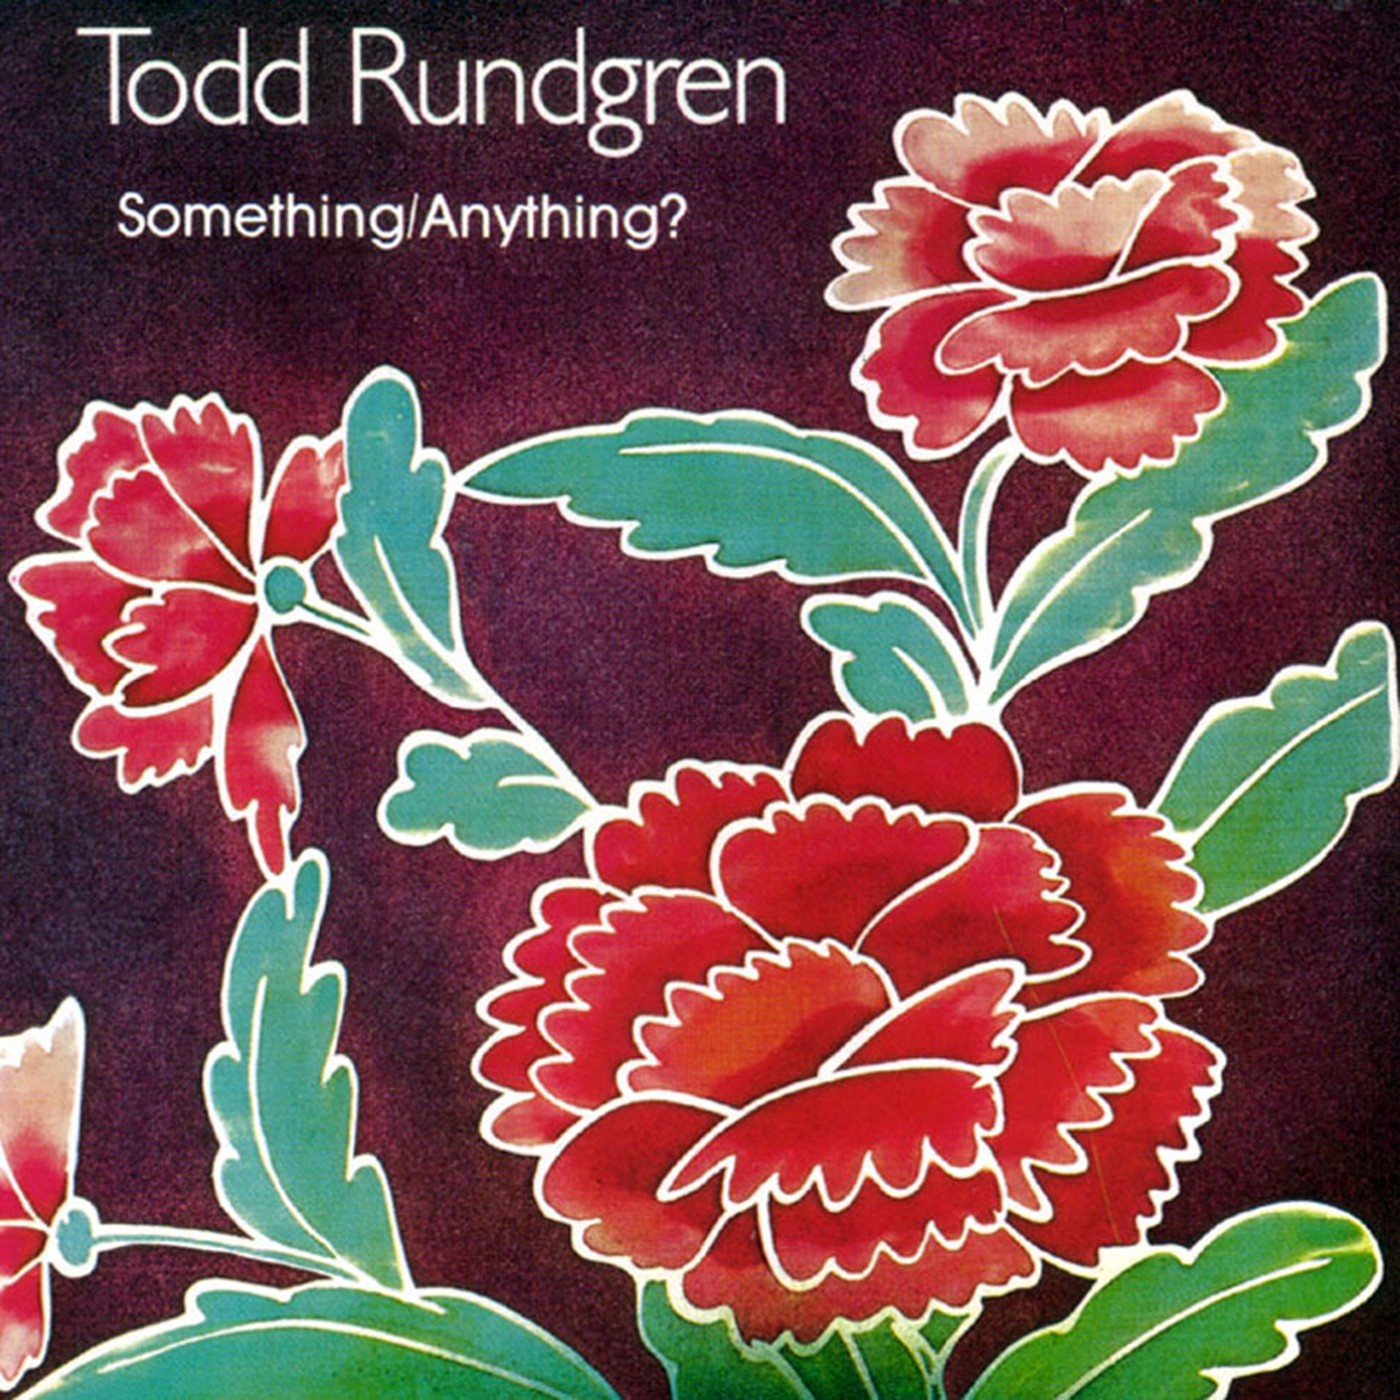 SomethingAnything Todd Rundgren review